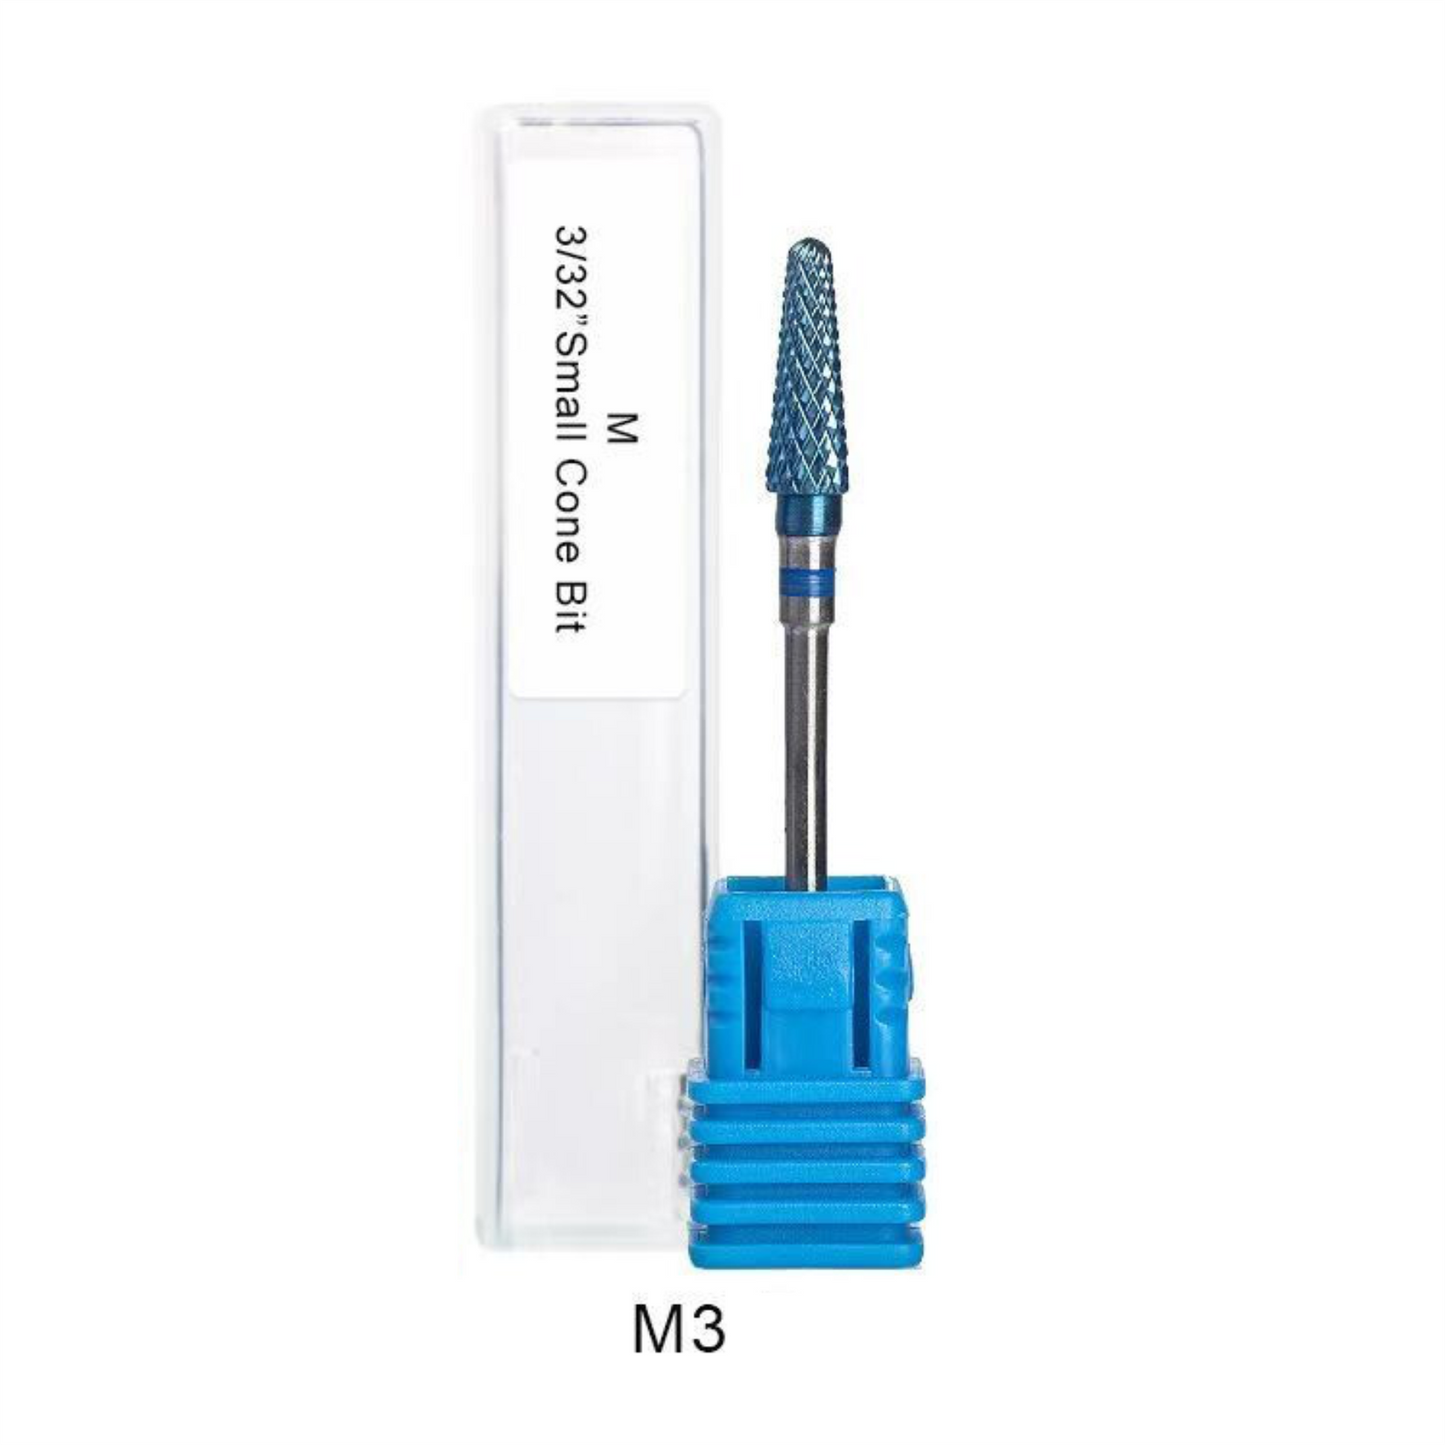 Tungsten Blue Nail Drill Bit M3 - Small Cone Bit